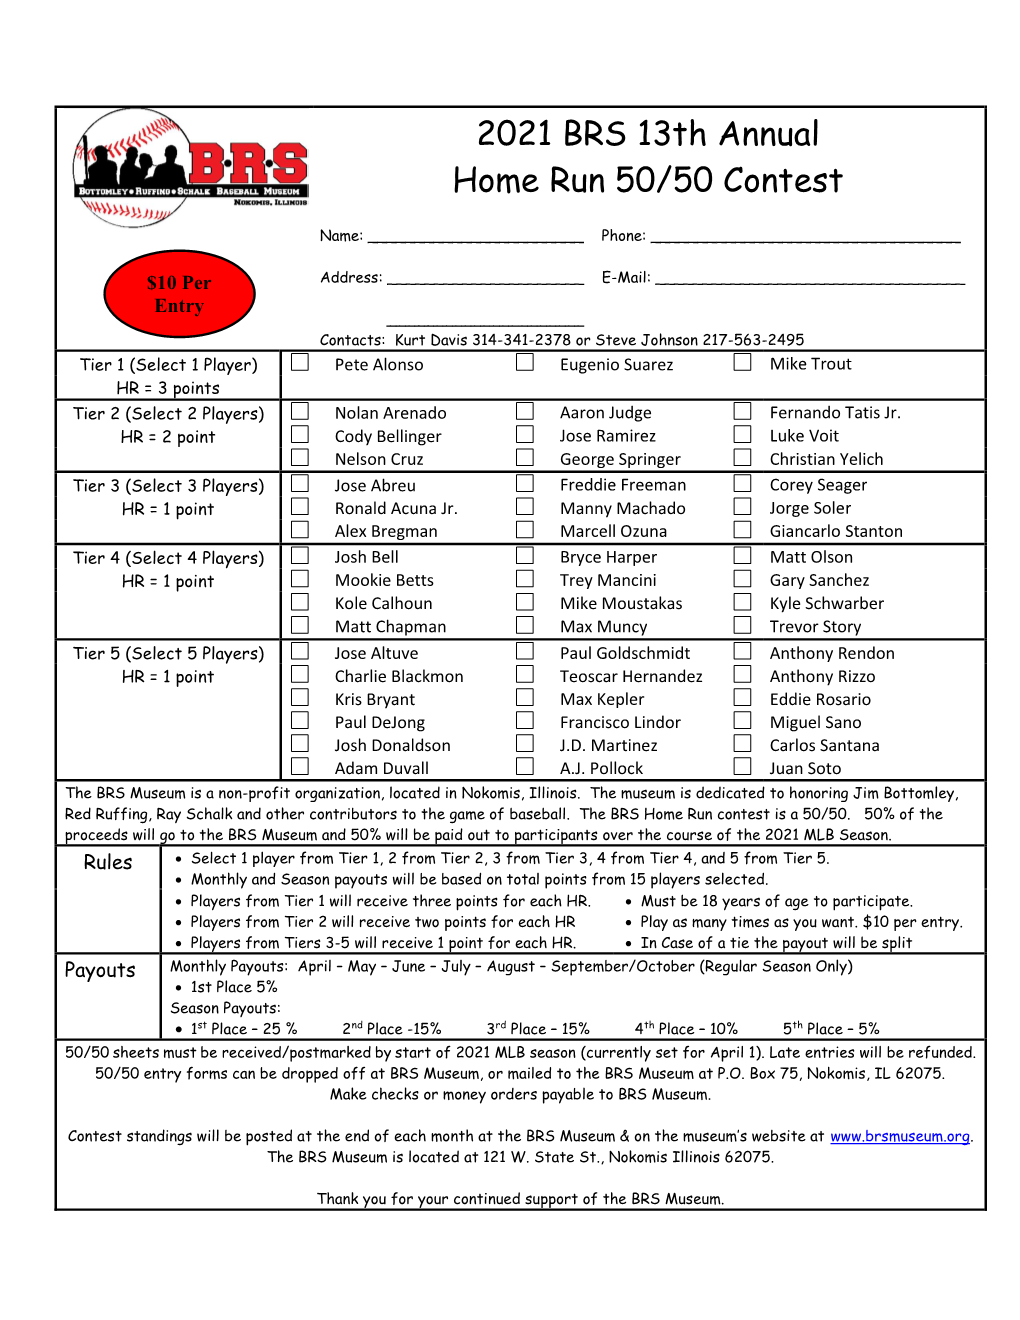 2021 BRS 13Th Annual Home Run 50/50 Contest